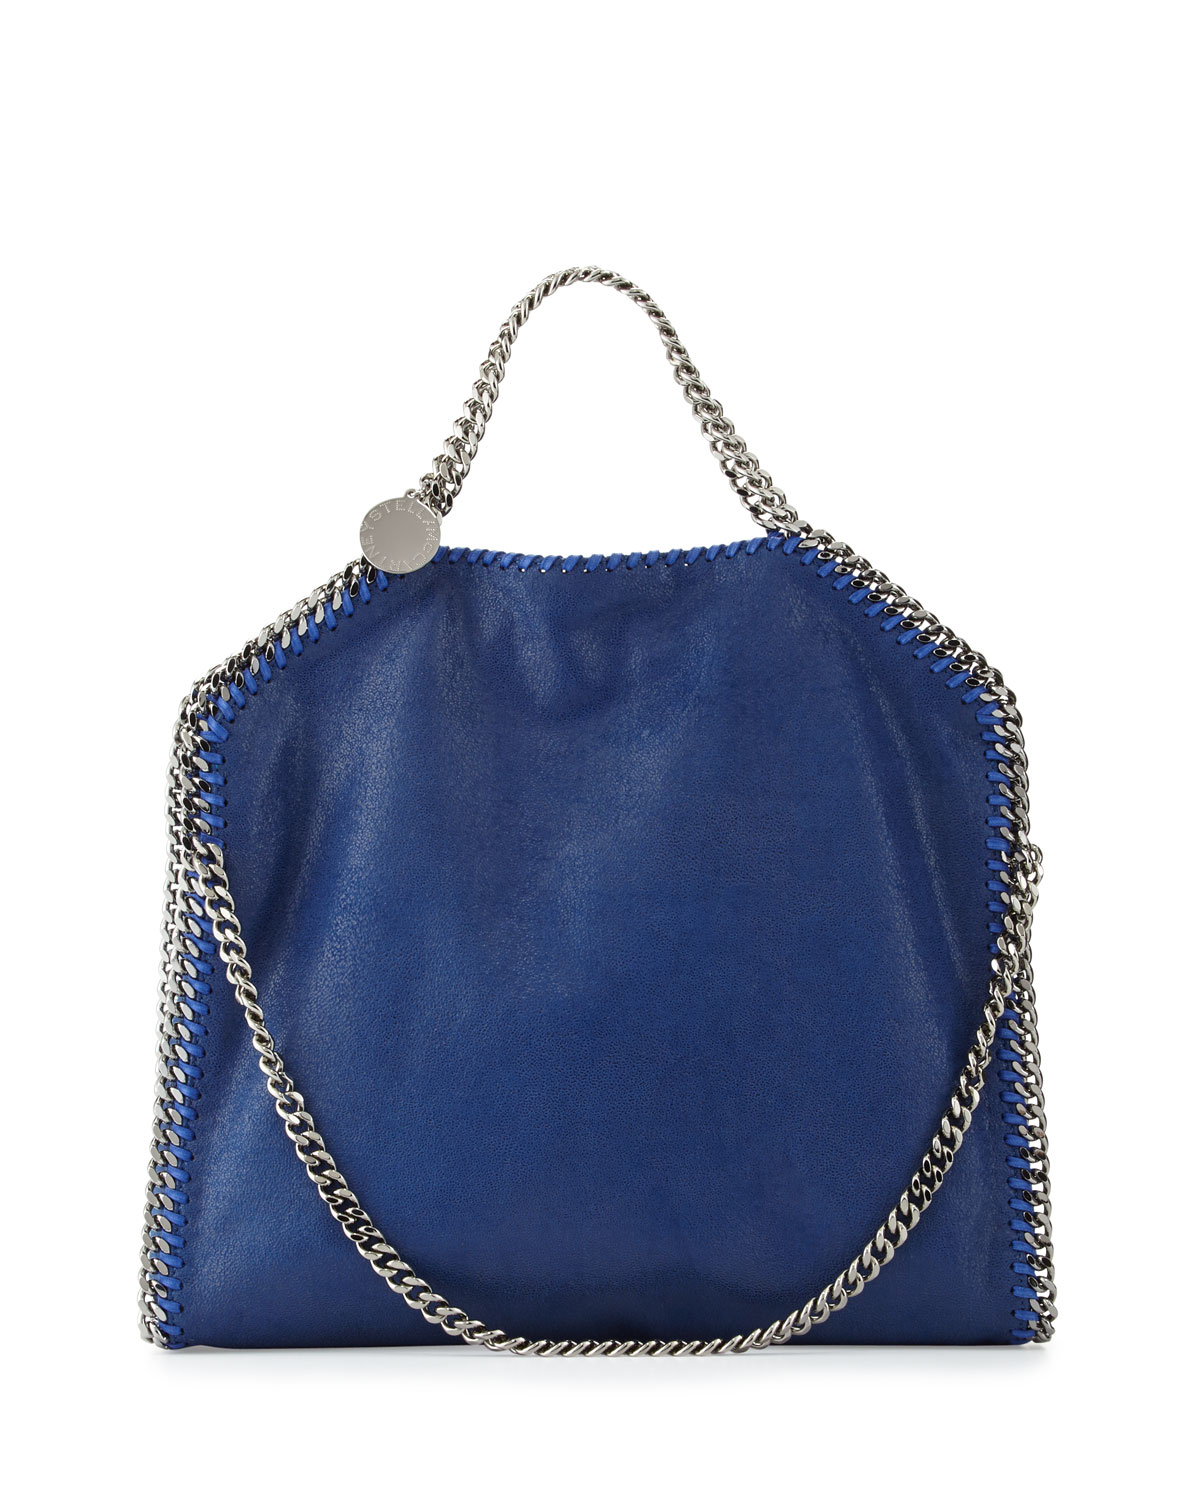 Lyst - Stella Mccartney Falabella Fold-over Tote Bag in Blue